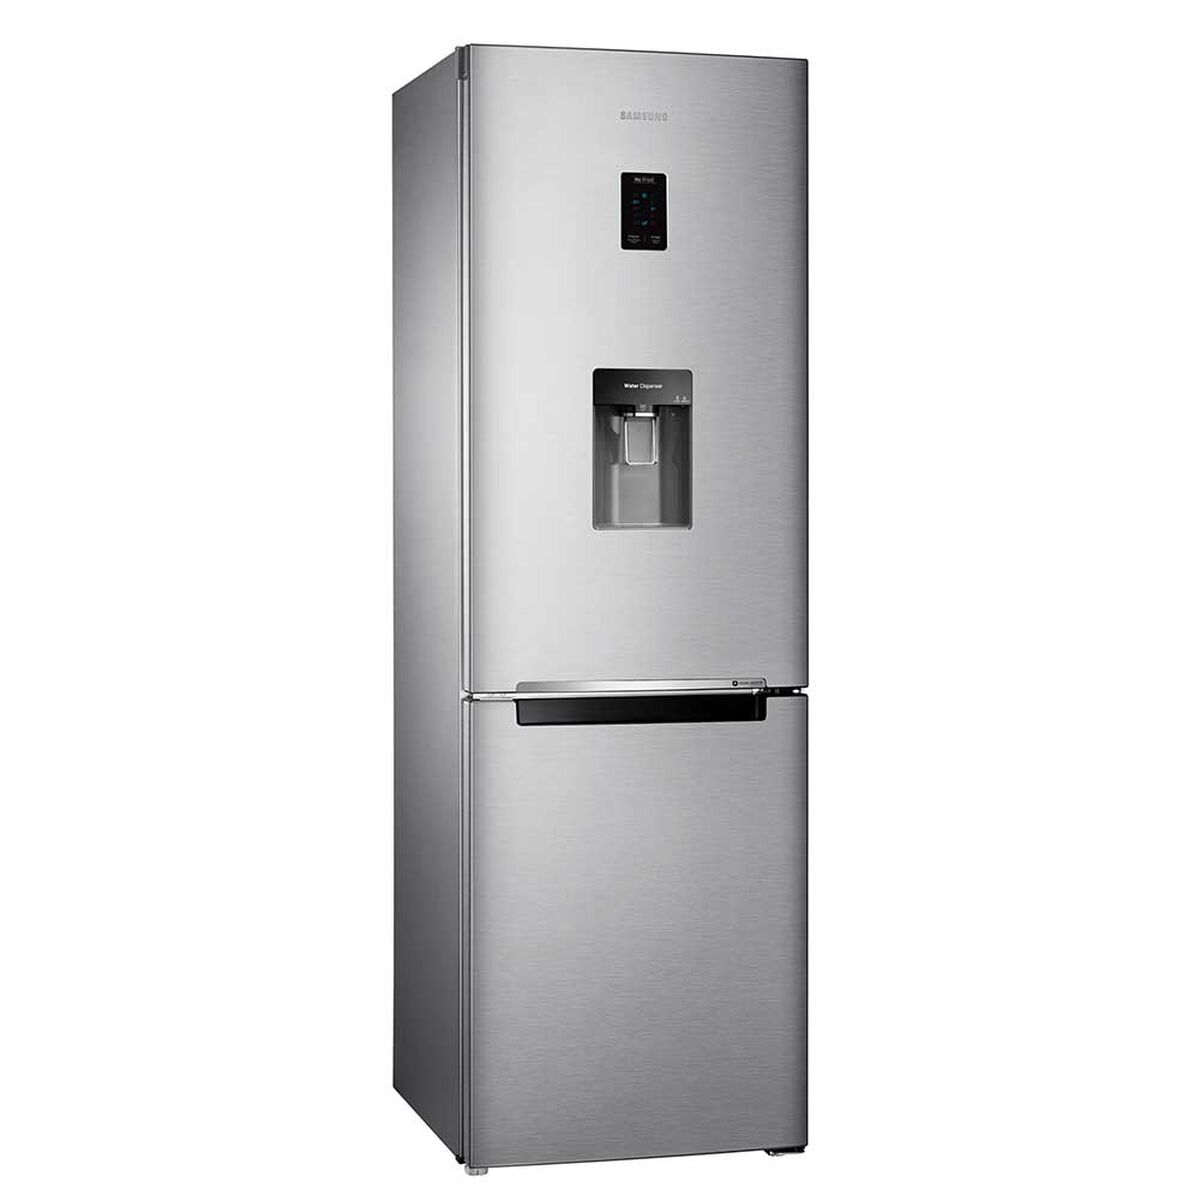 Refrigerador No Frost Samsung RB33J3830SA 321 lts.